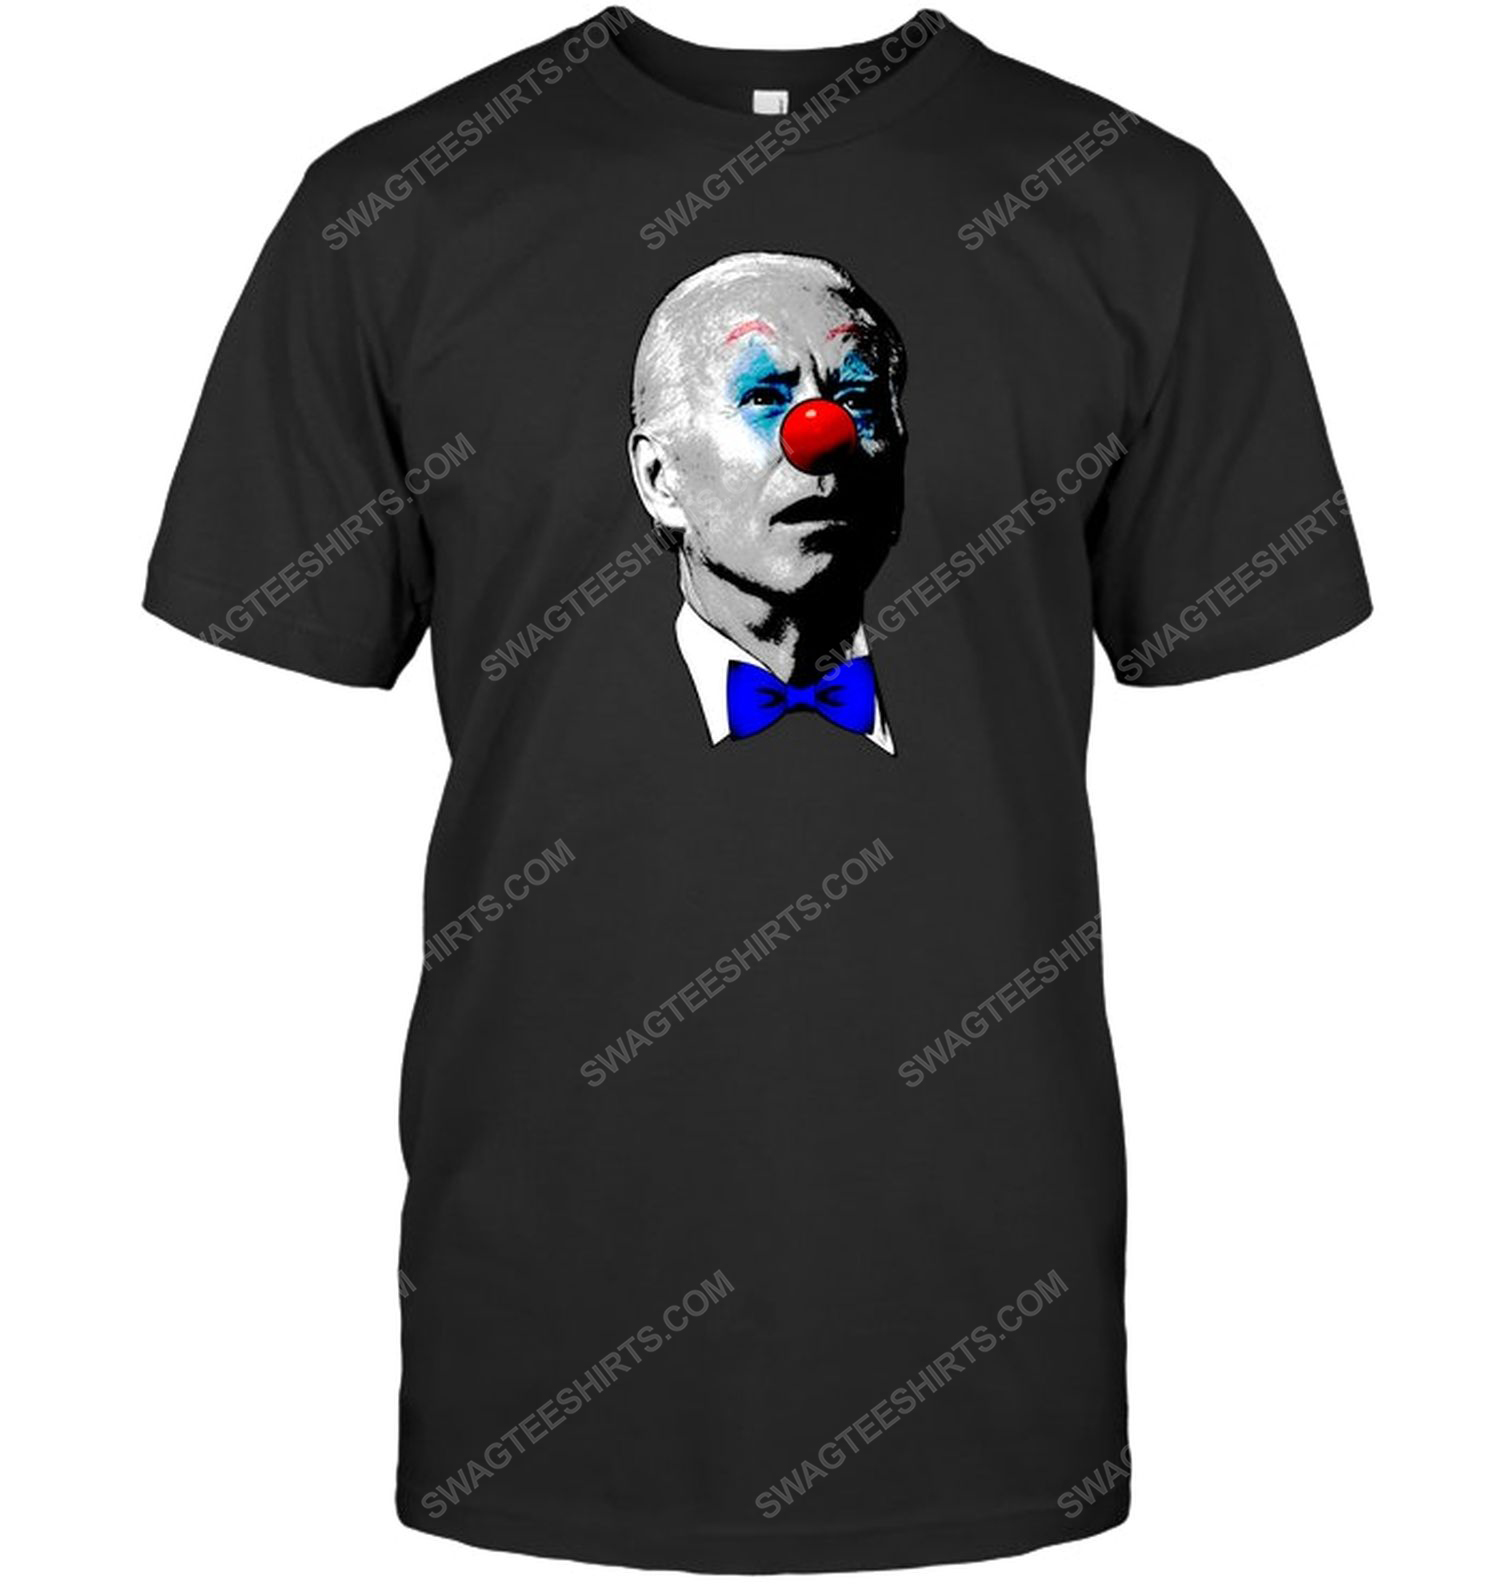 Joe biden clown face political tshirt